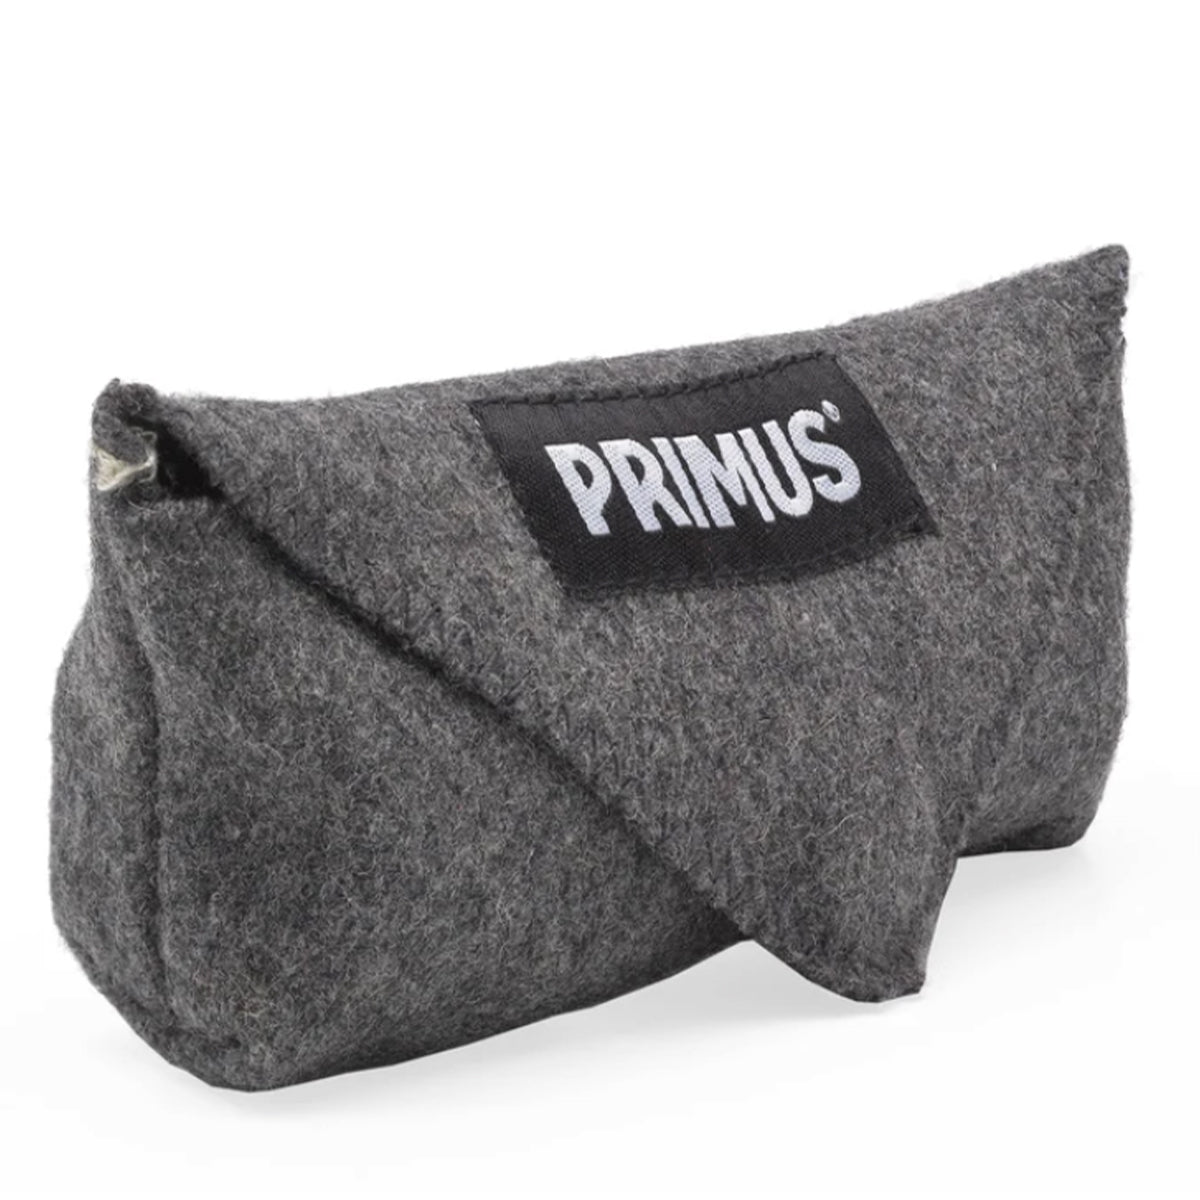 Primus Firestick TI Stove in  by GOHUNT | Primus - GOHUNT Shop